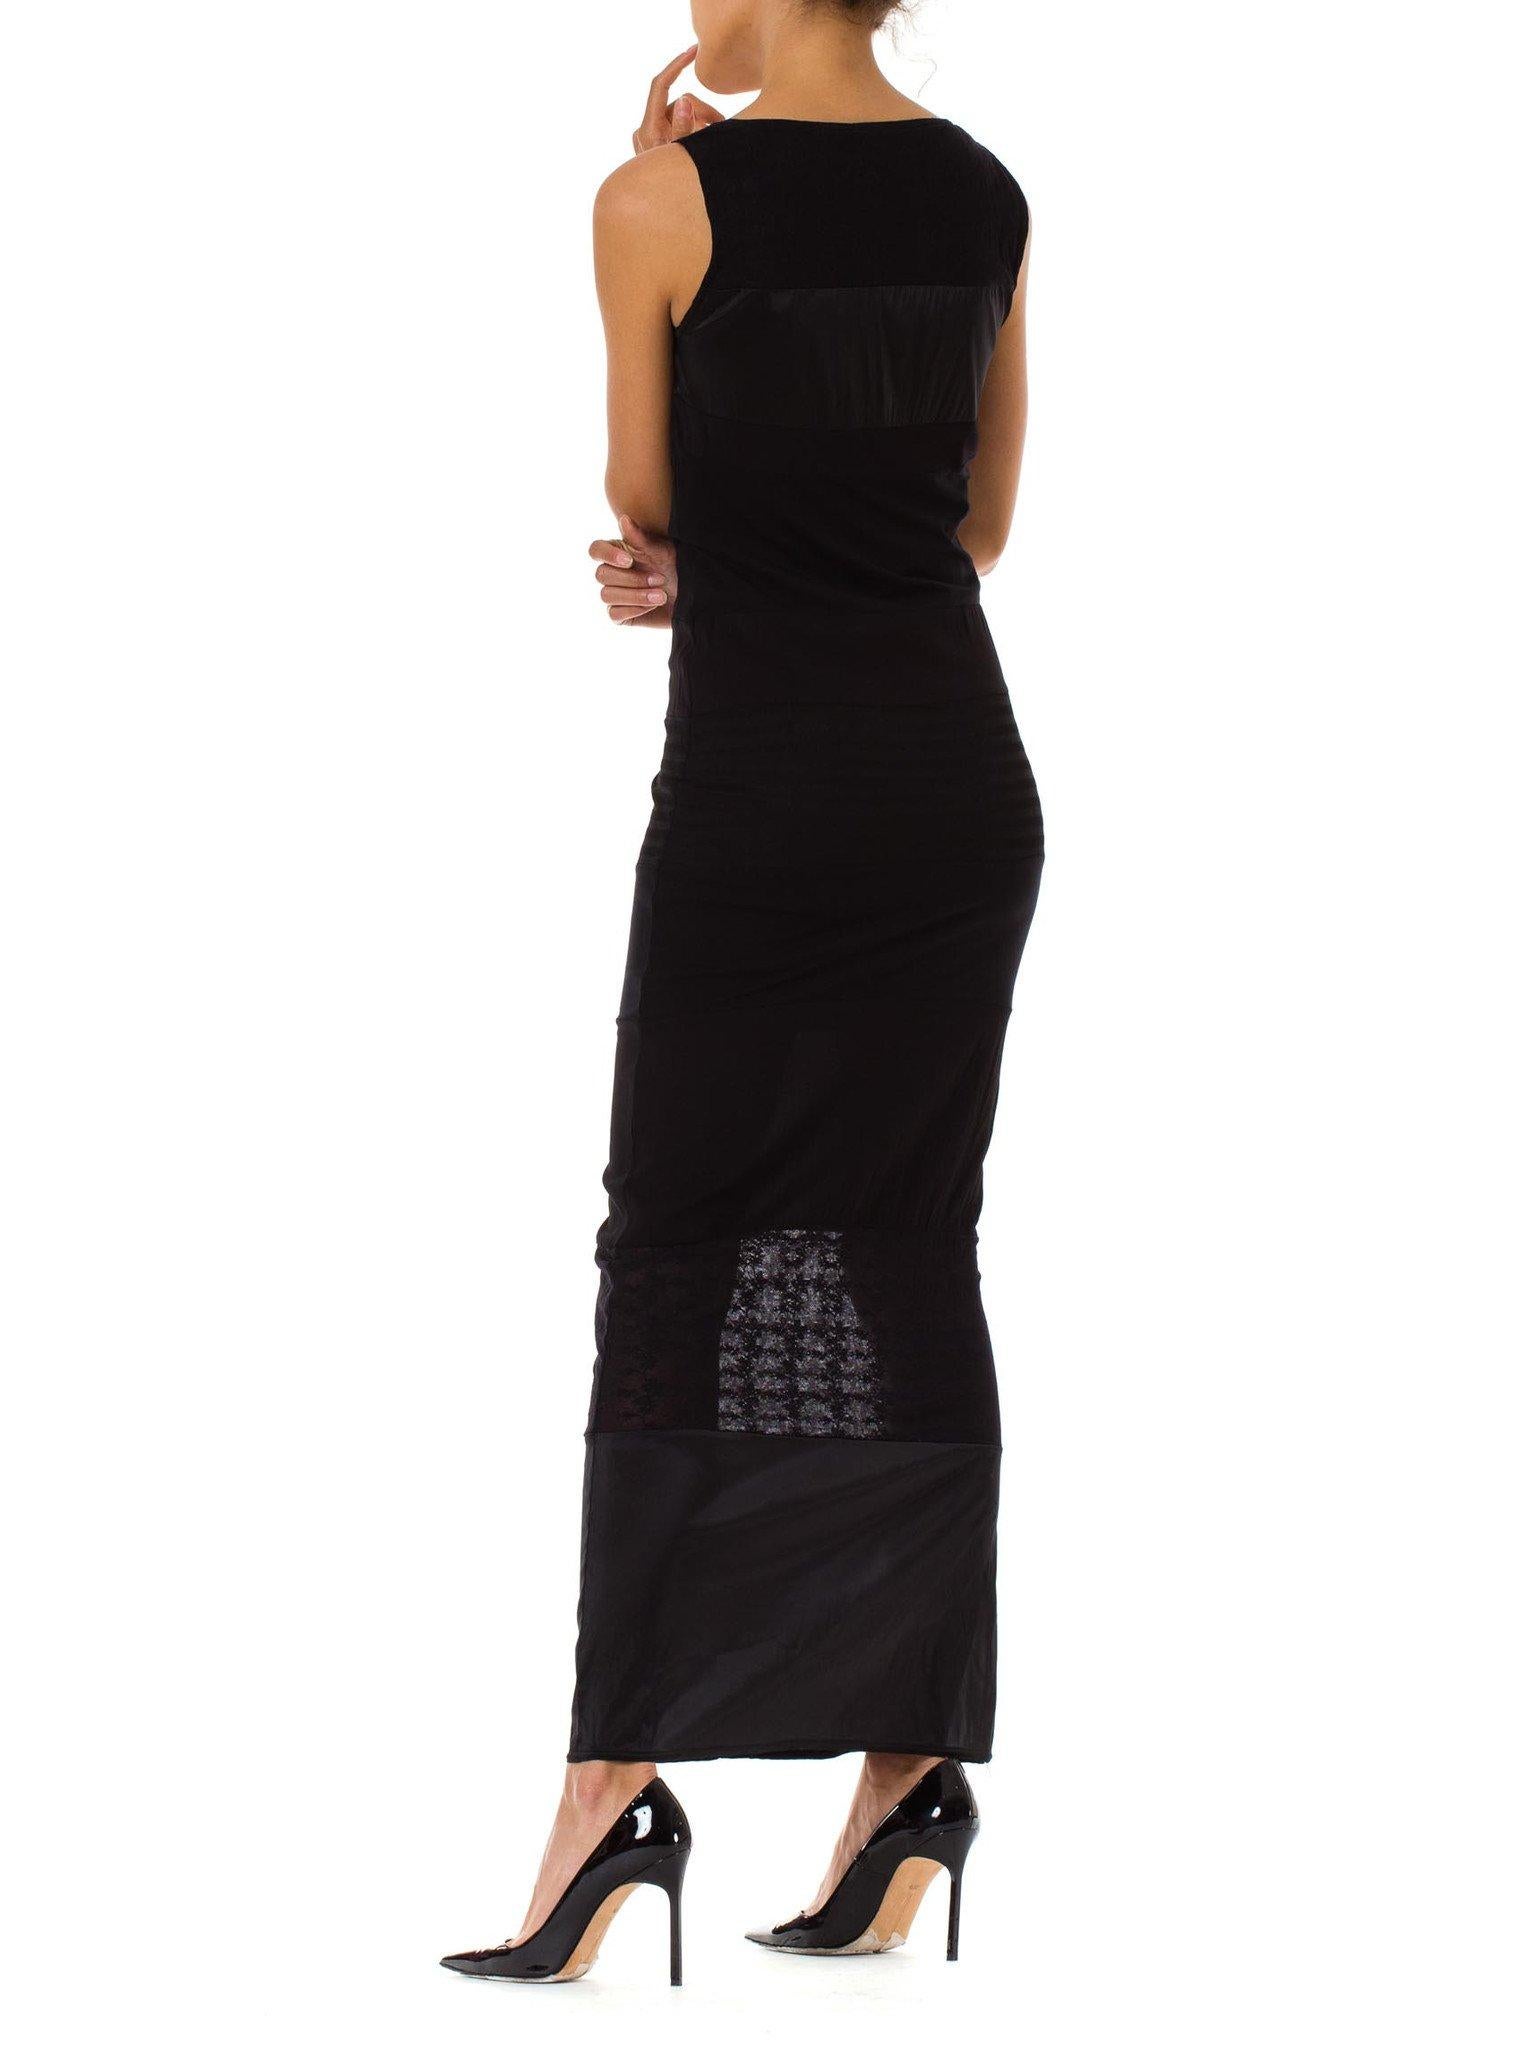 1990S OZBEK Black Sheer Poly/Lycra Minimalist Patchwork Dress 4